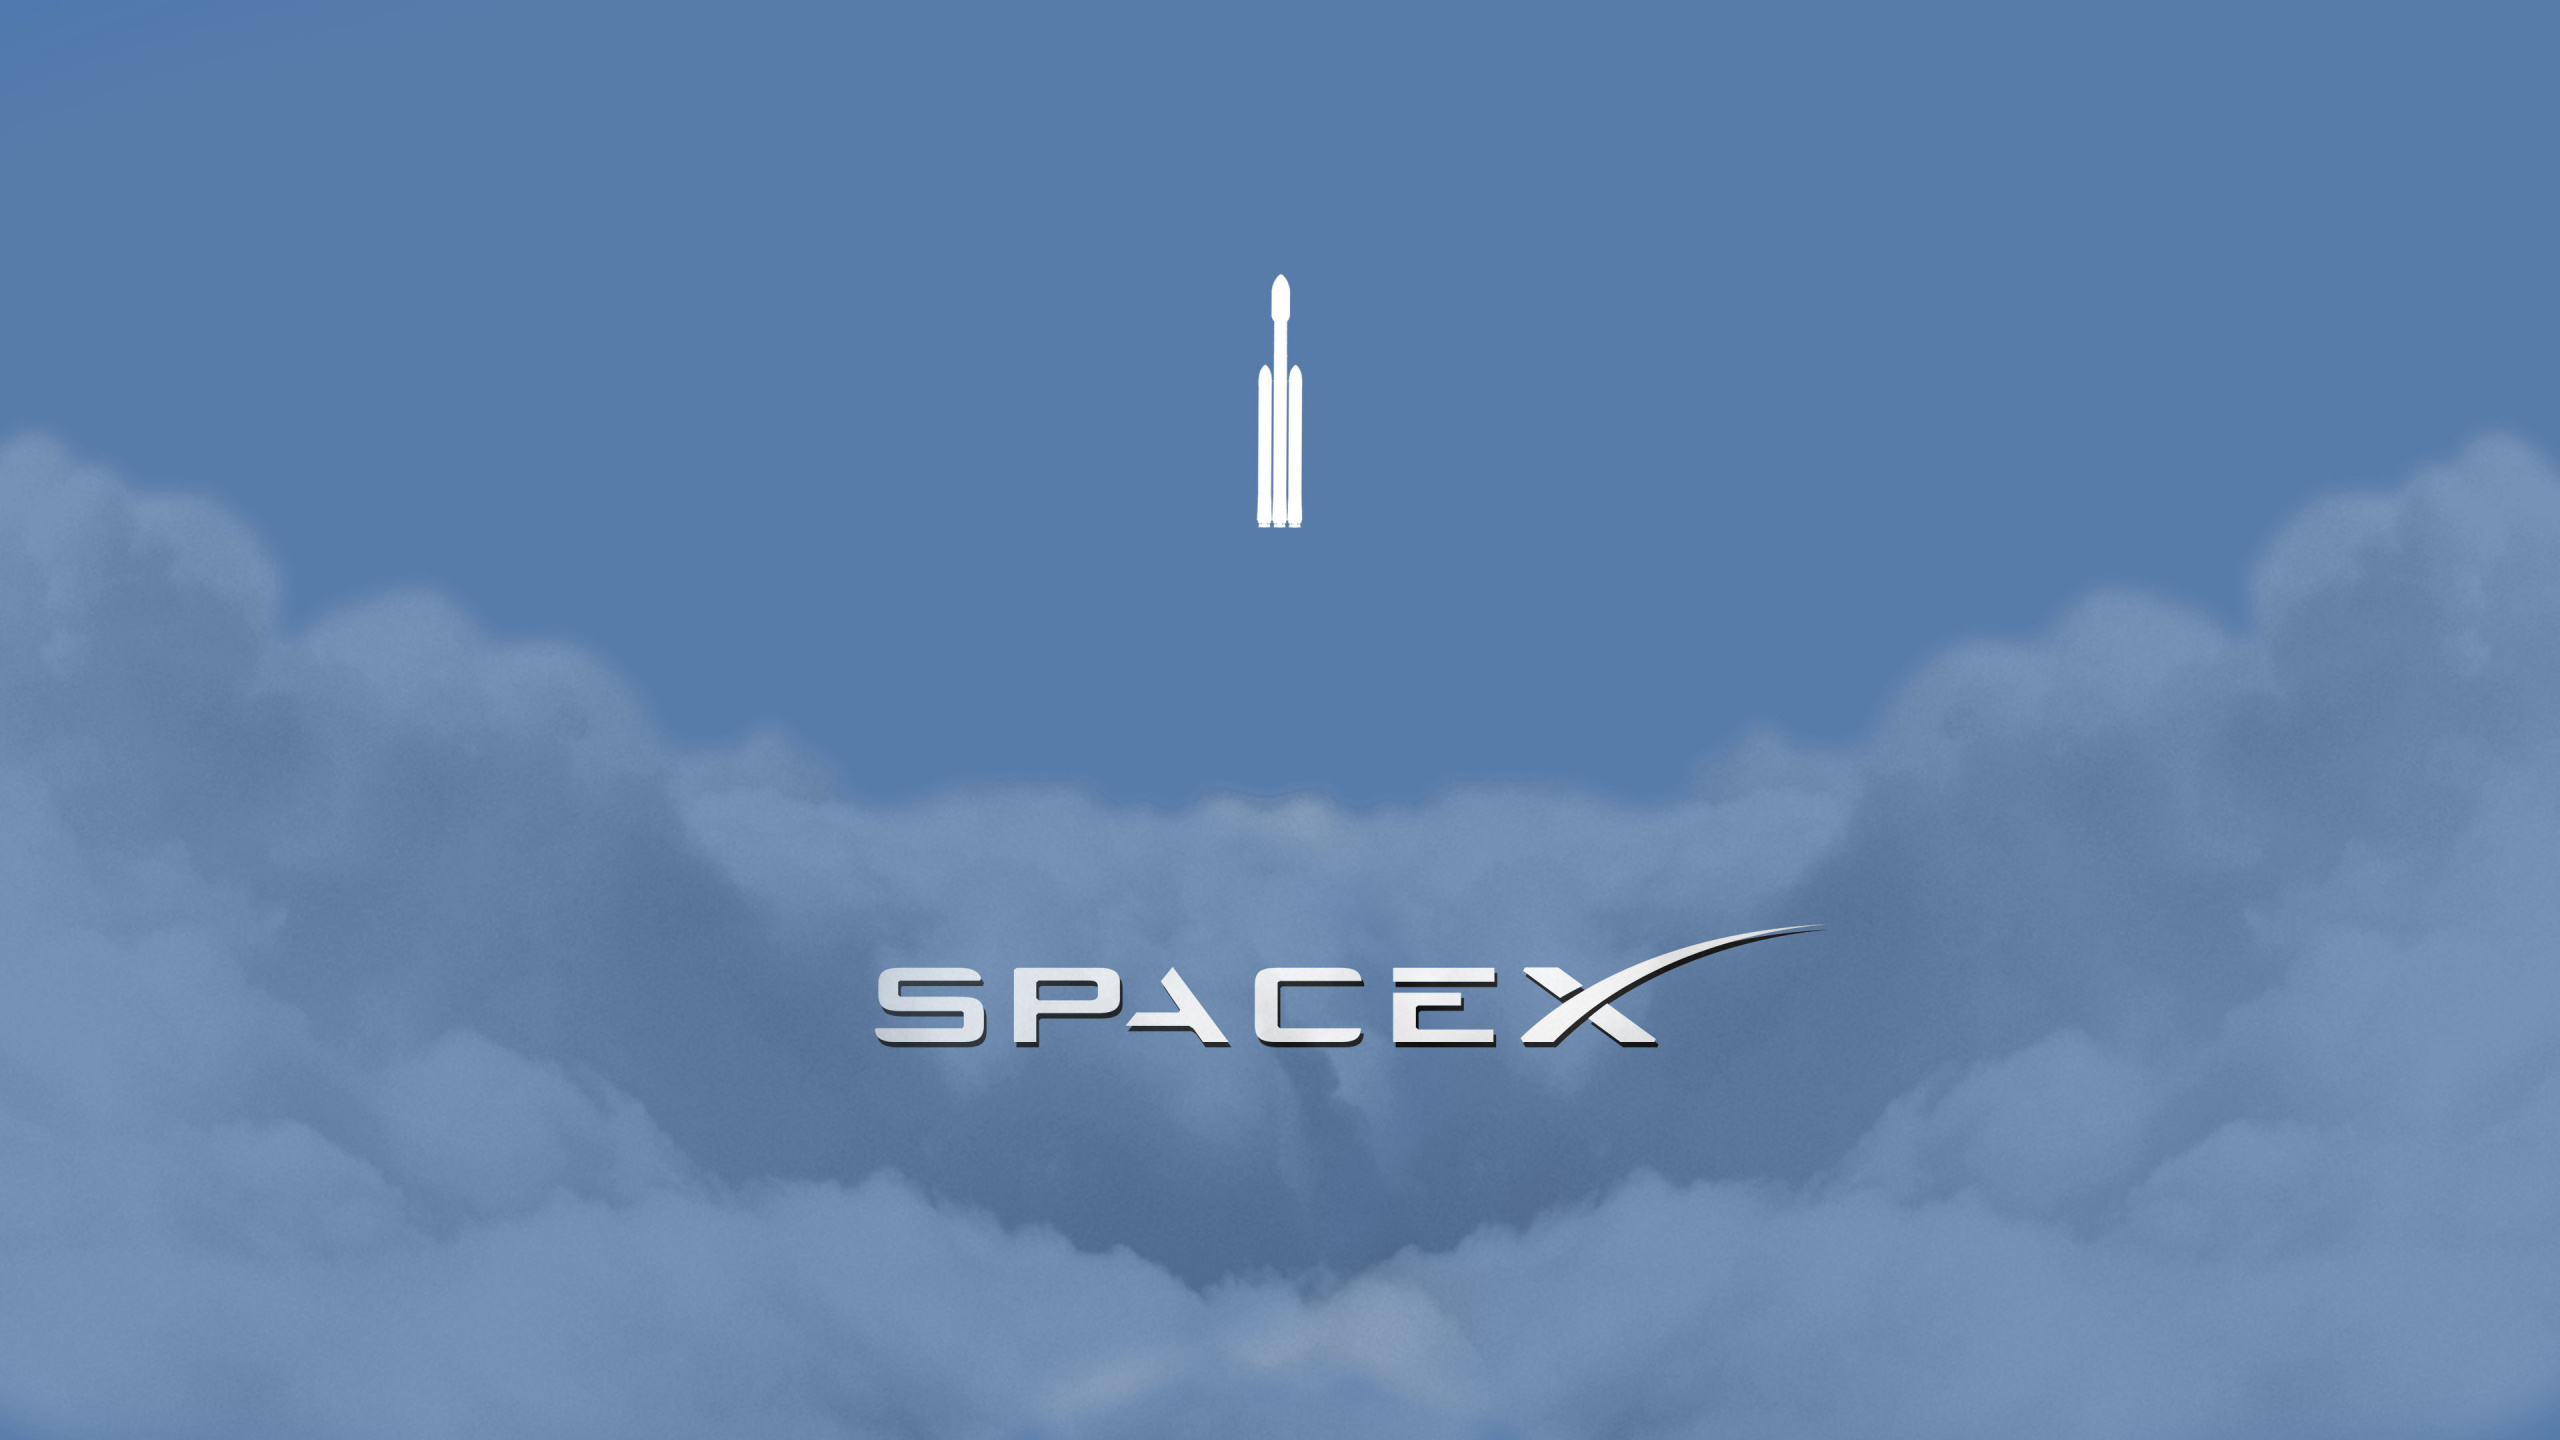 SpaceX, 火箭, 伊隆麝香斯拉敞篷跑车, 气氛, 航空航天工程 壁纸 2560x1440 允许